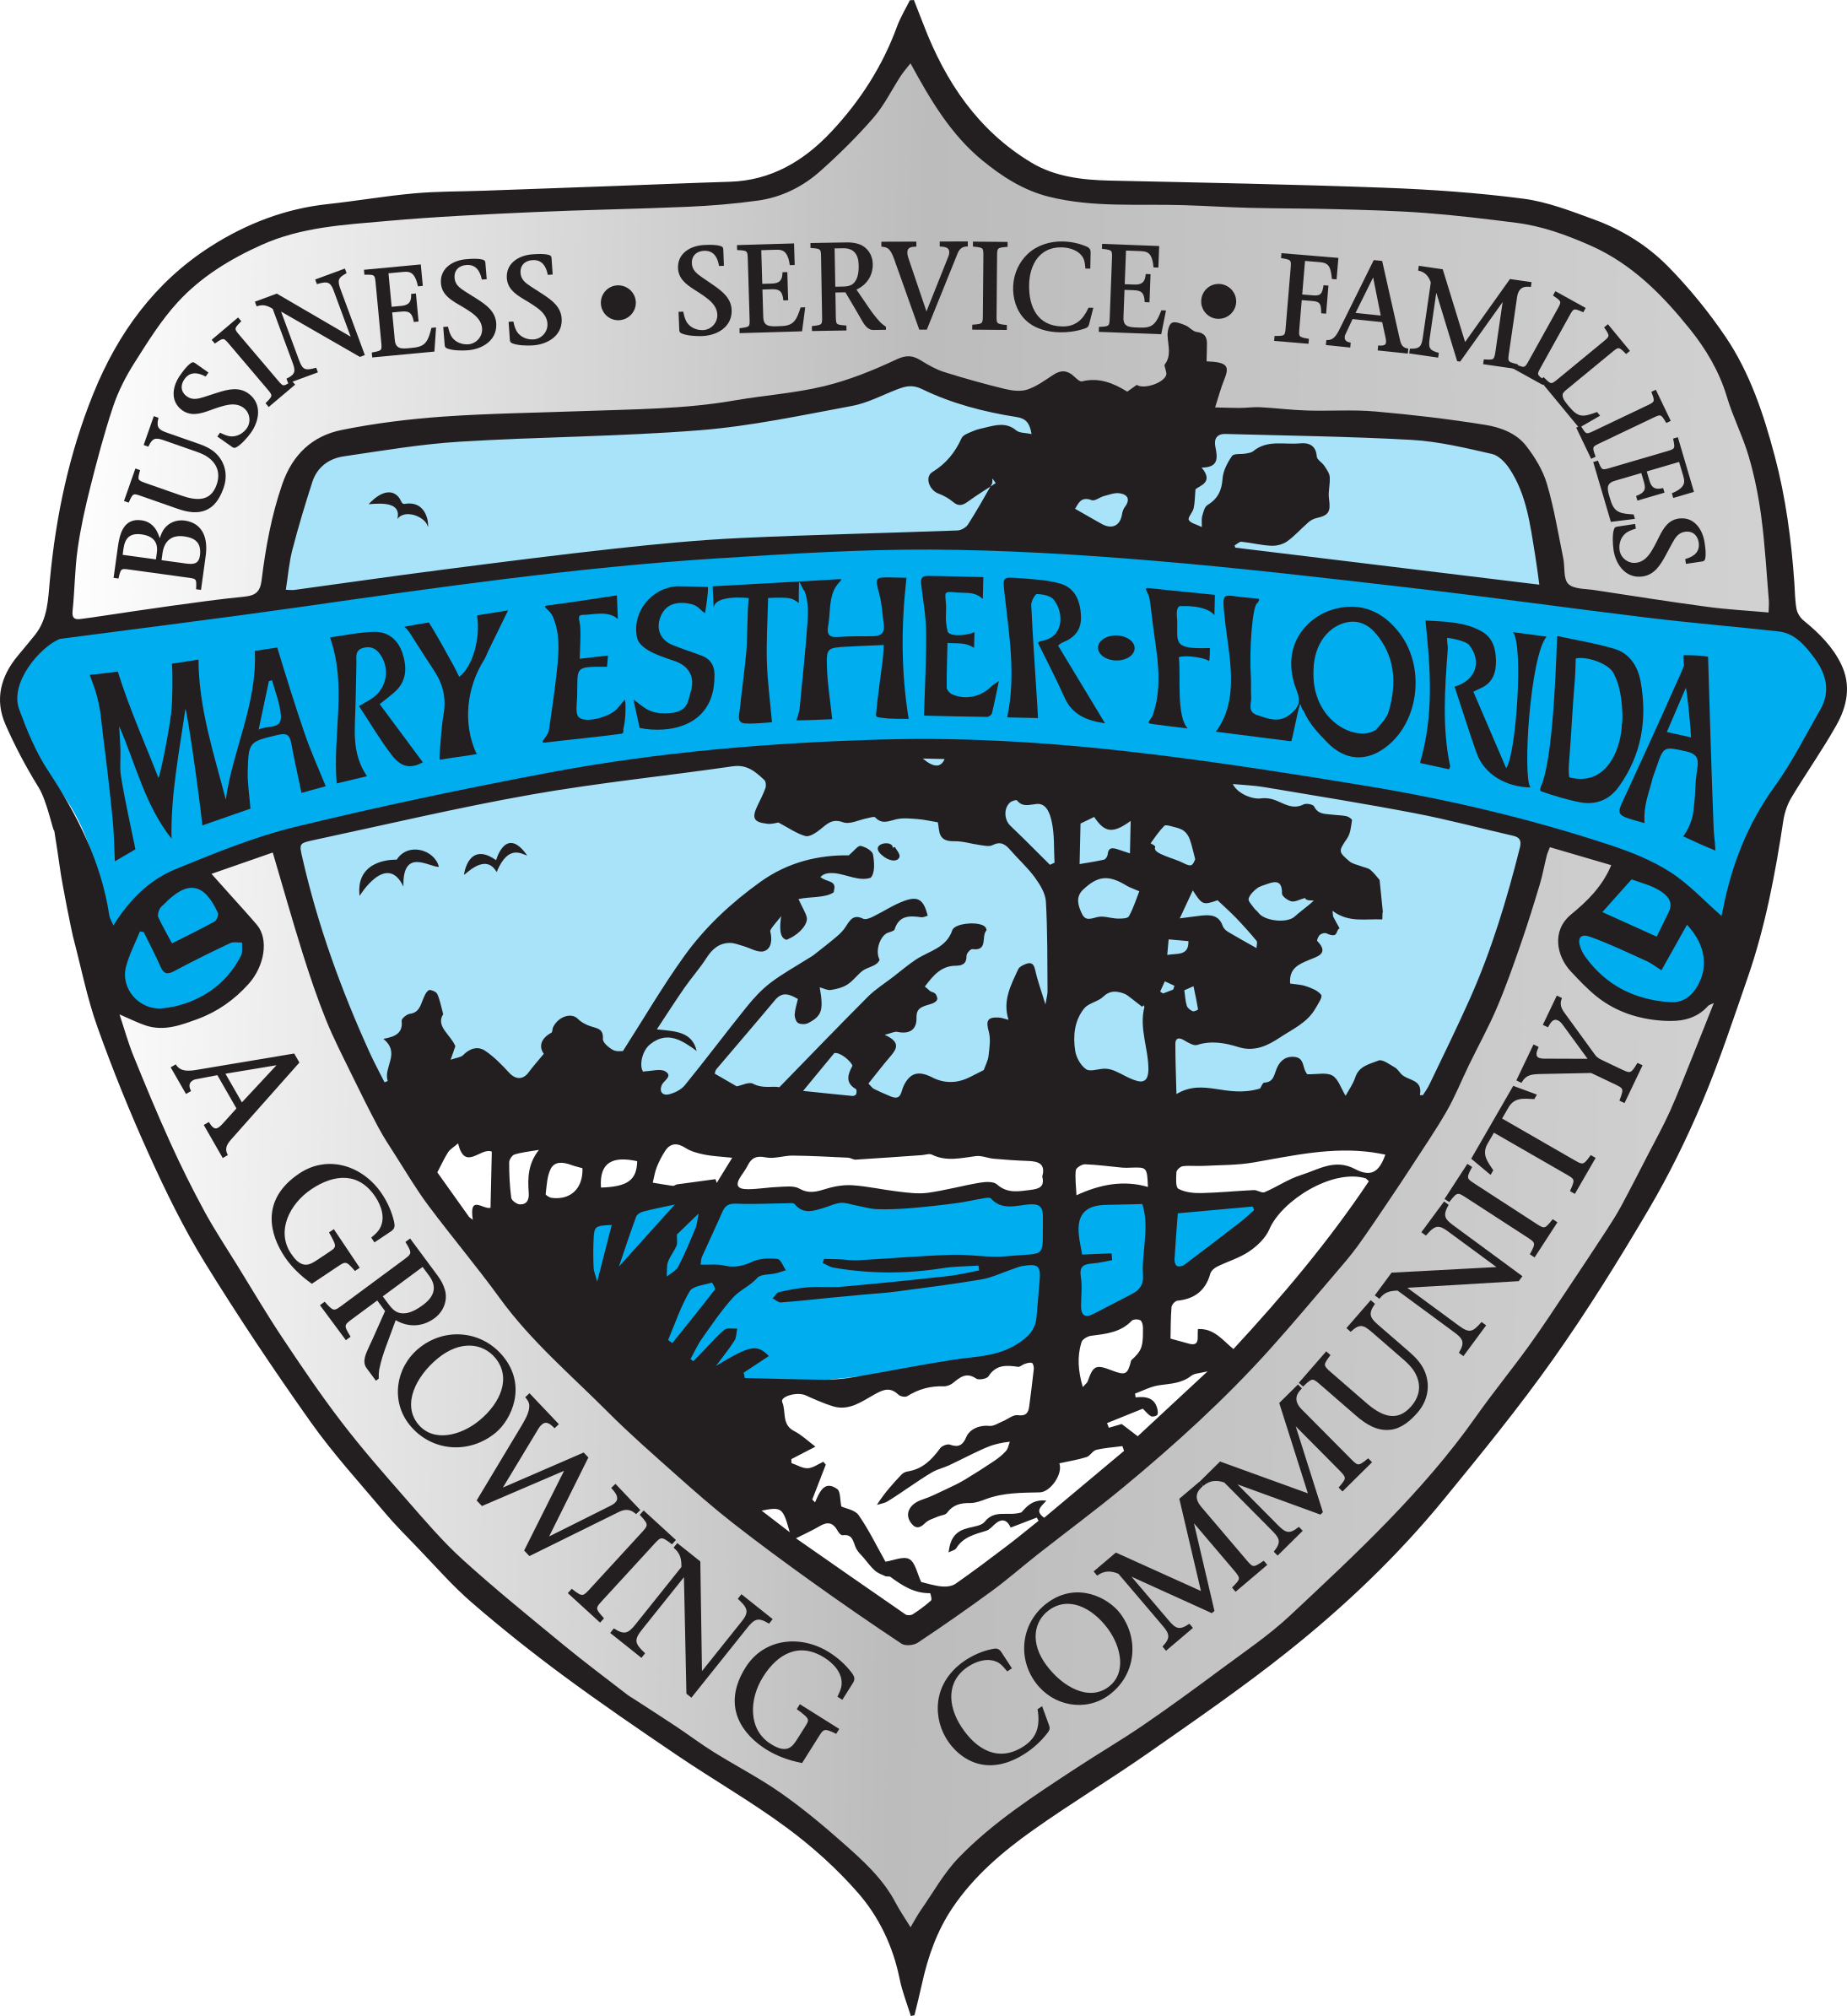 Organization logo of City of Mary Esther